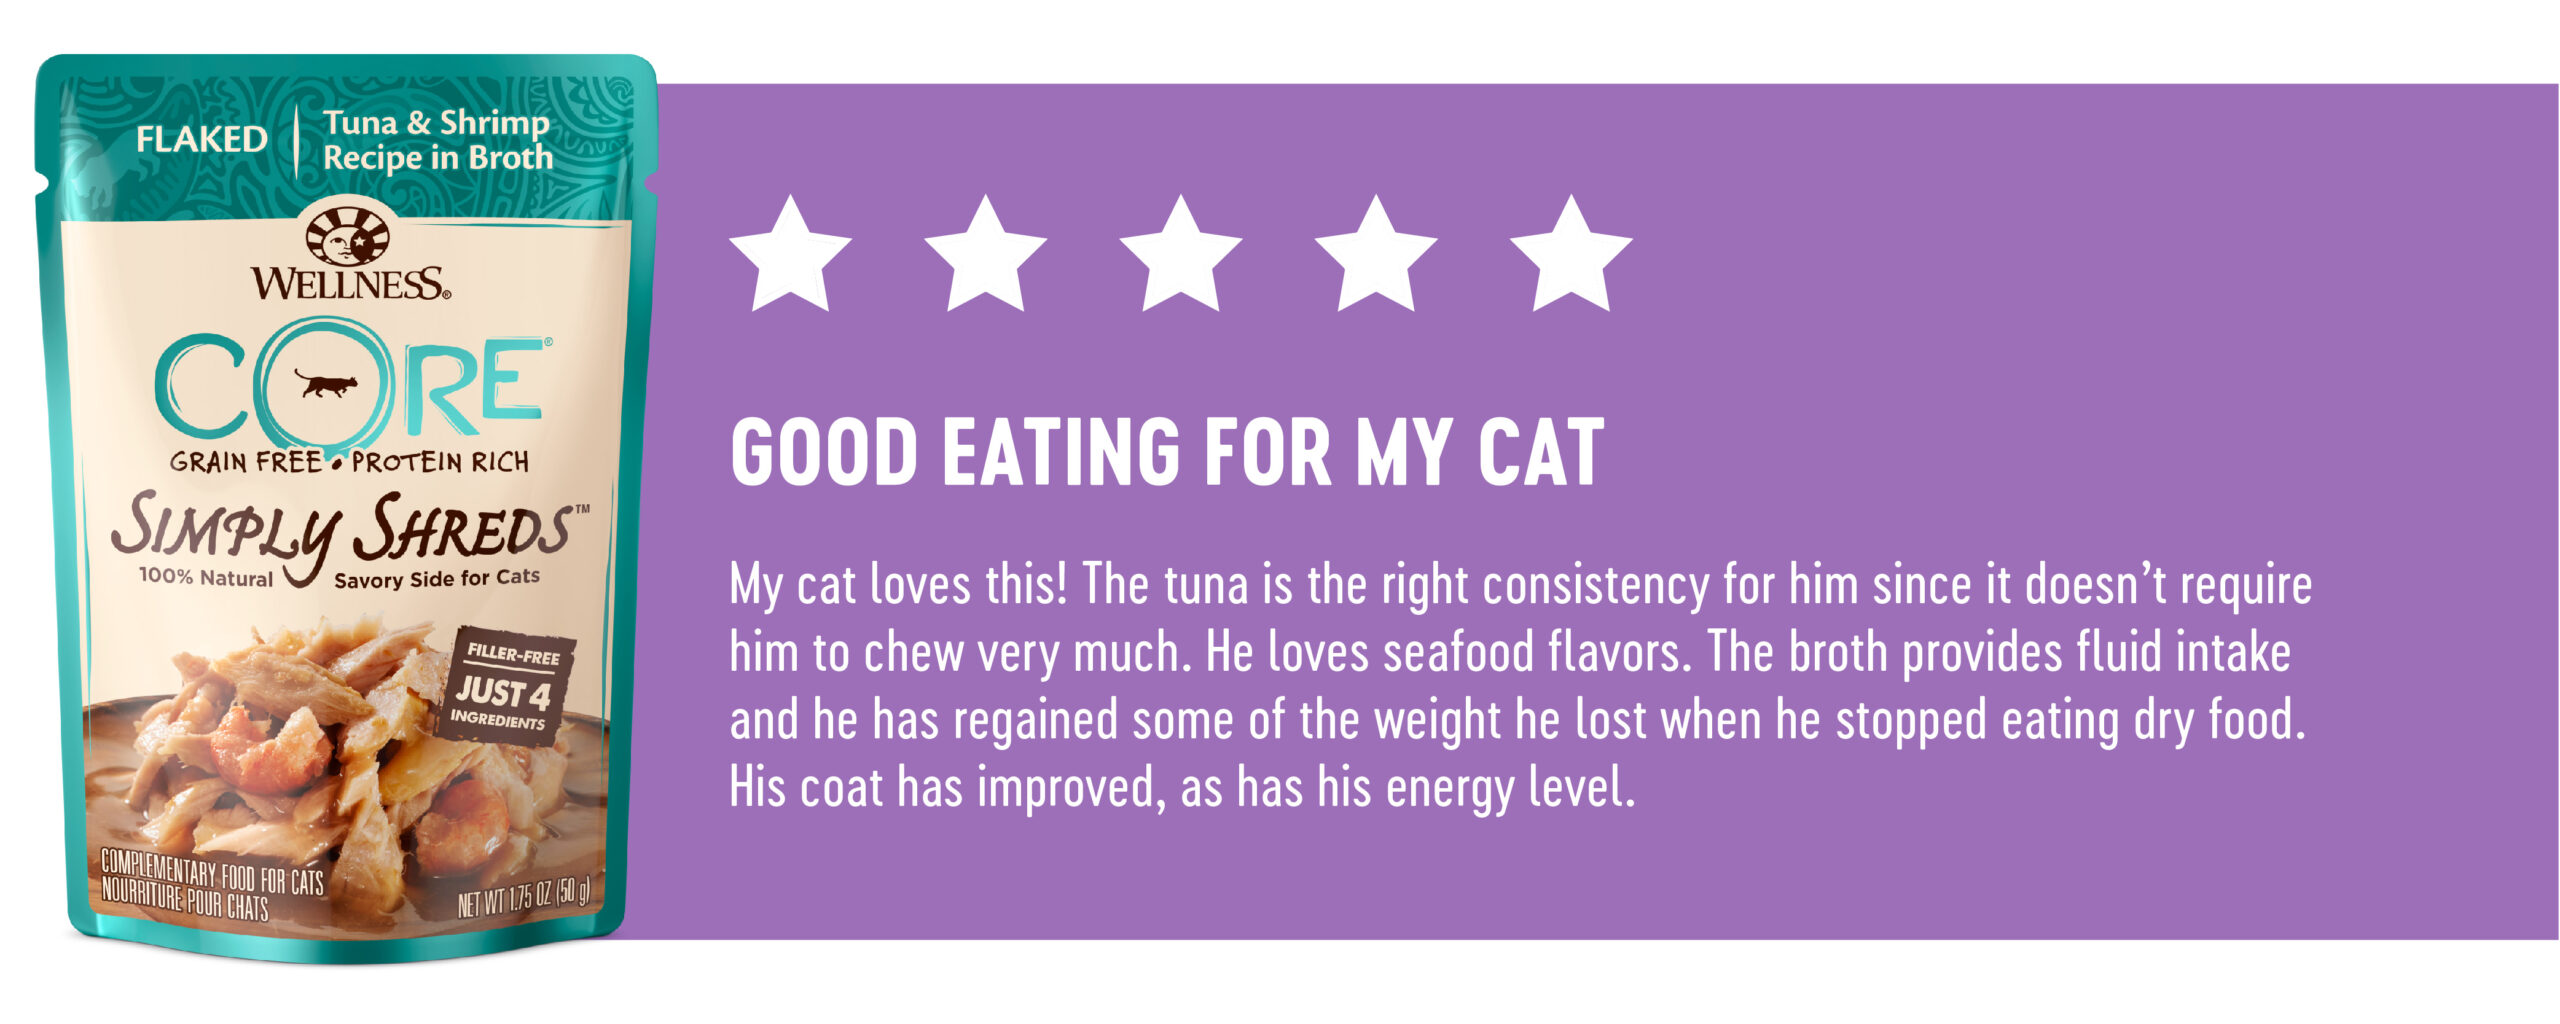 5 Stars - Good Eating For My Cat